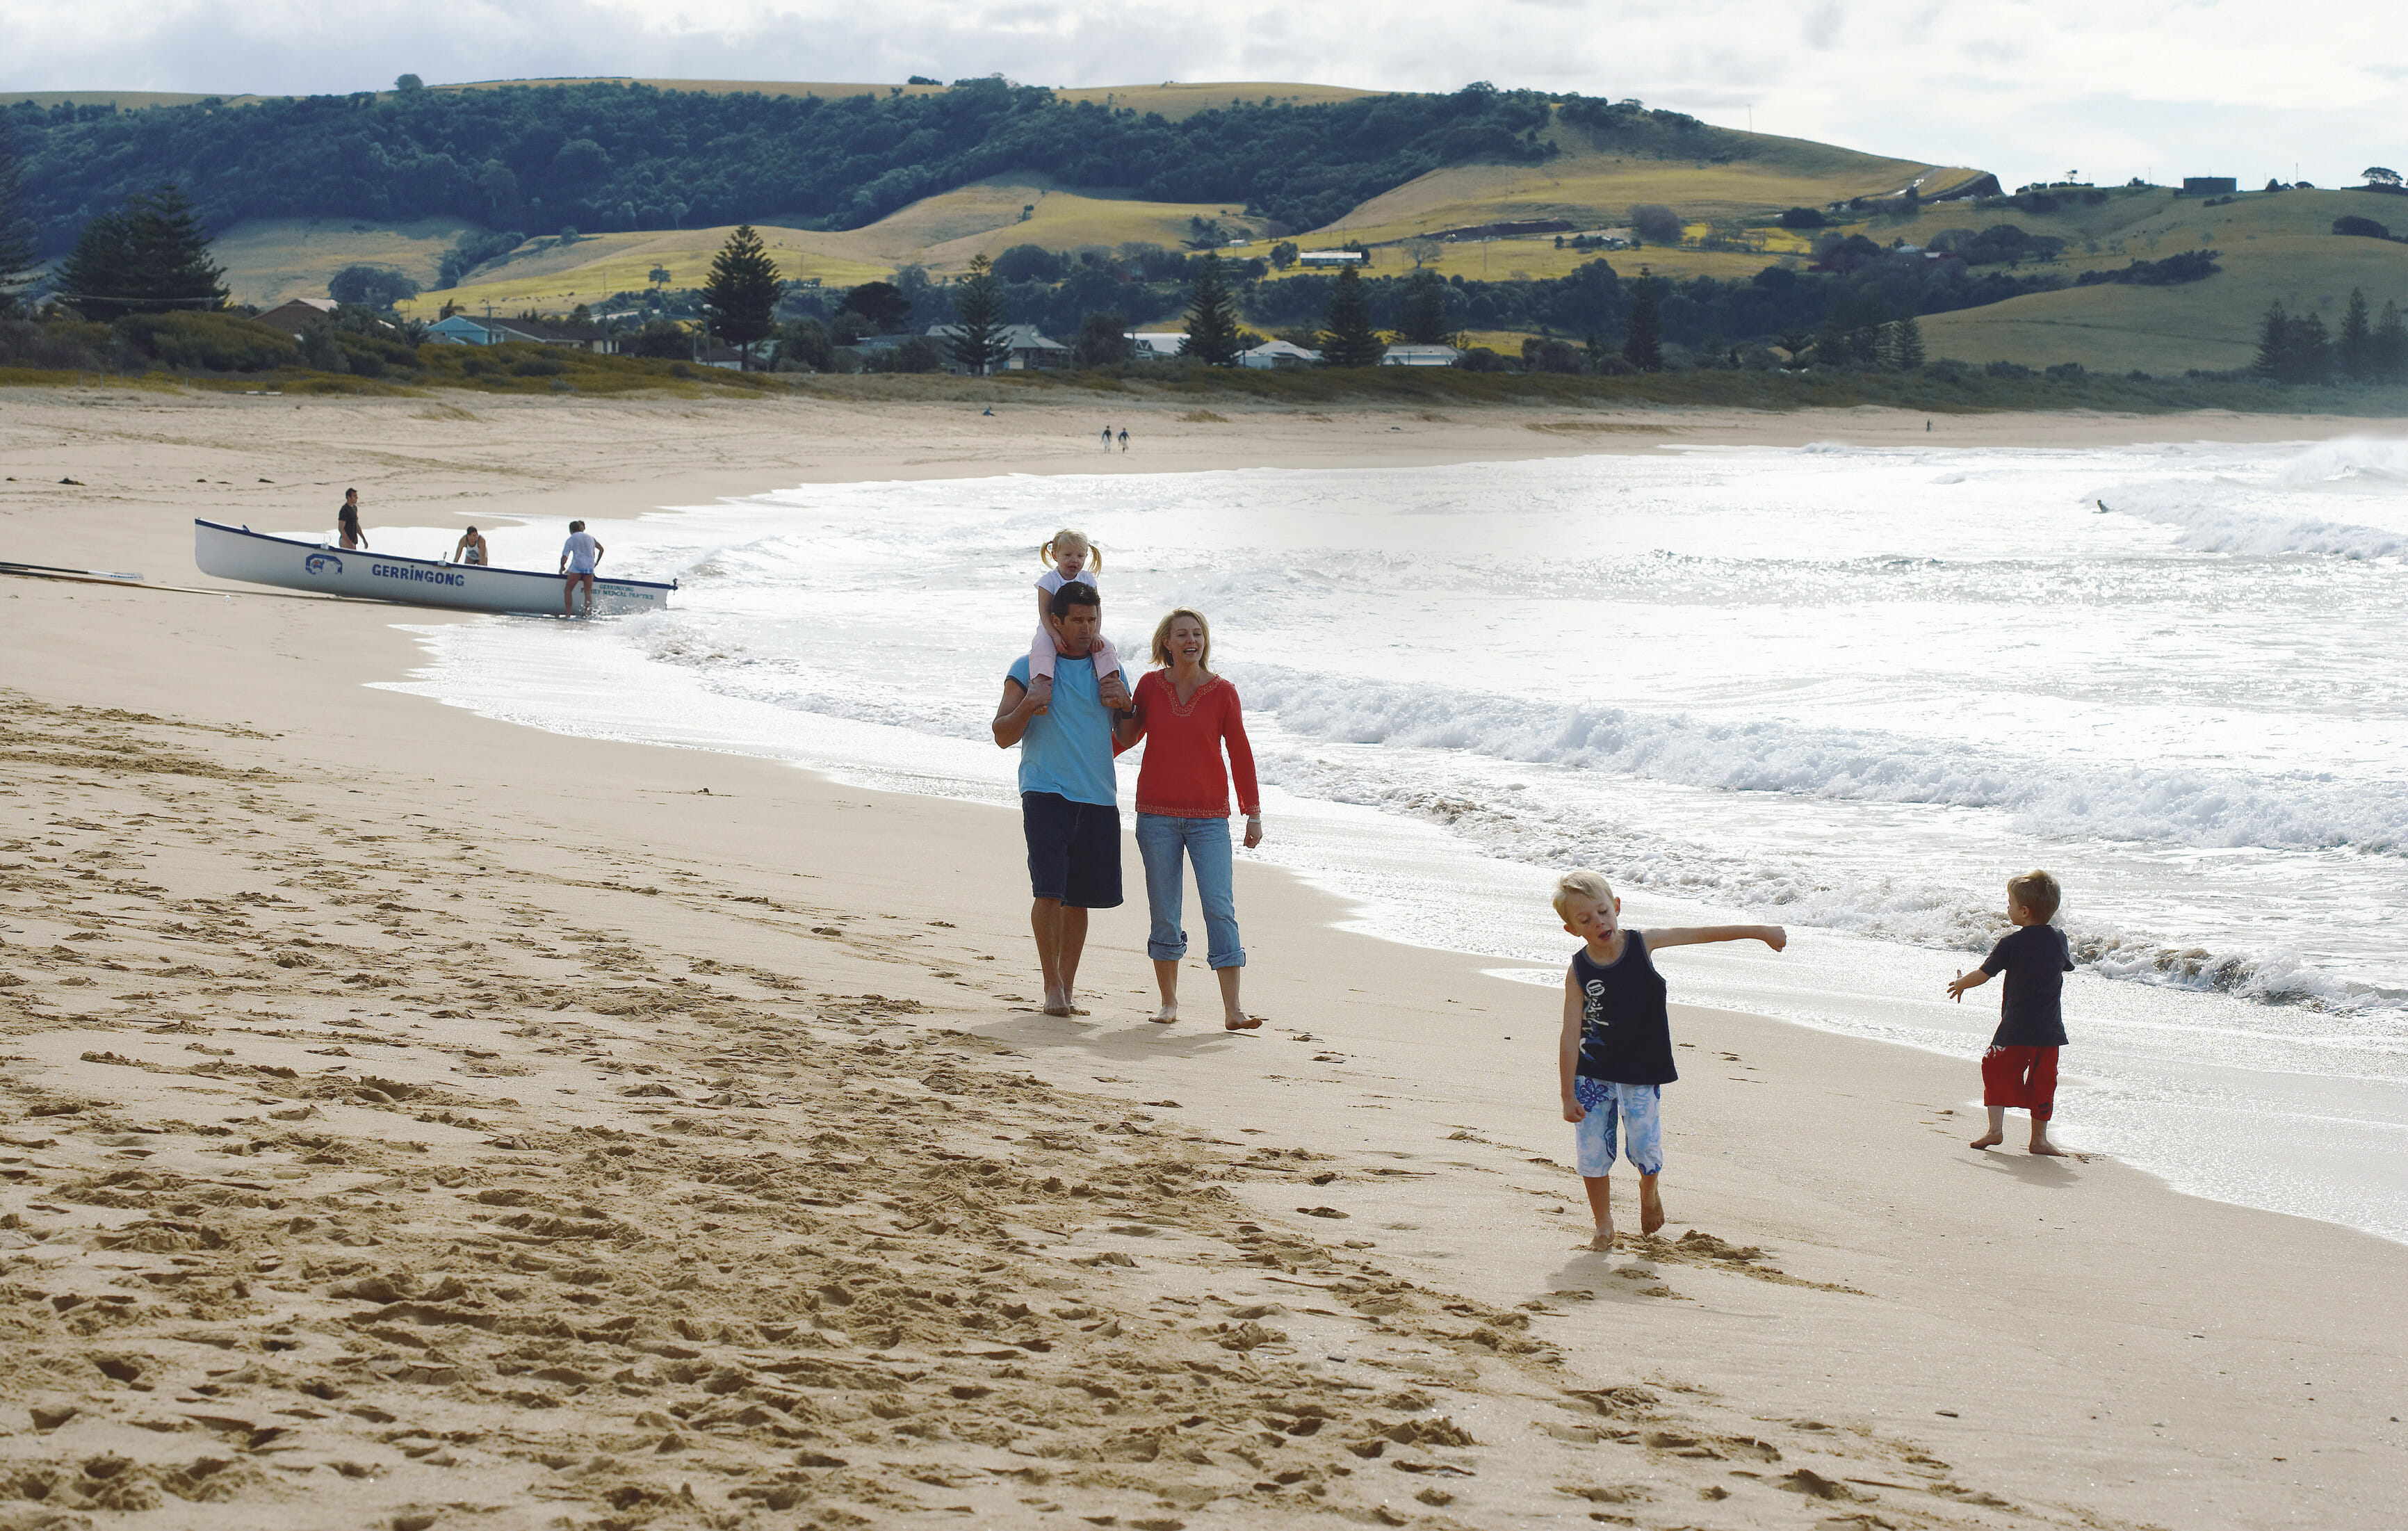 Family walking along Kiama beach, Illawarra, South Coast
Things to do in Kiama